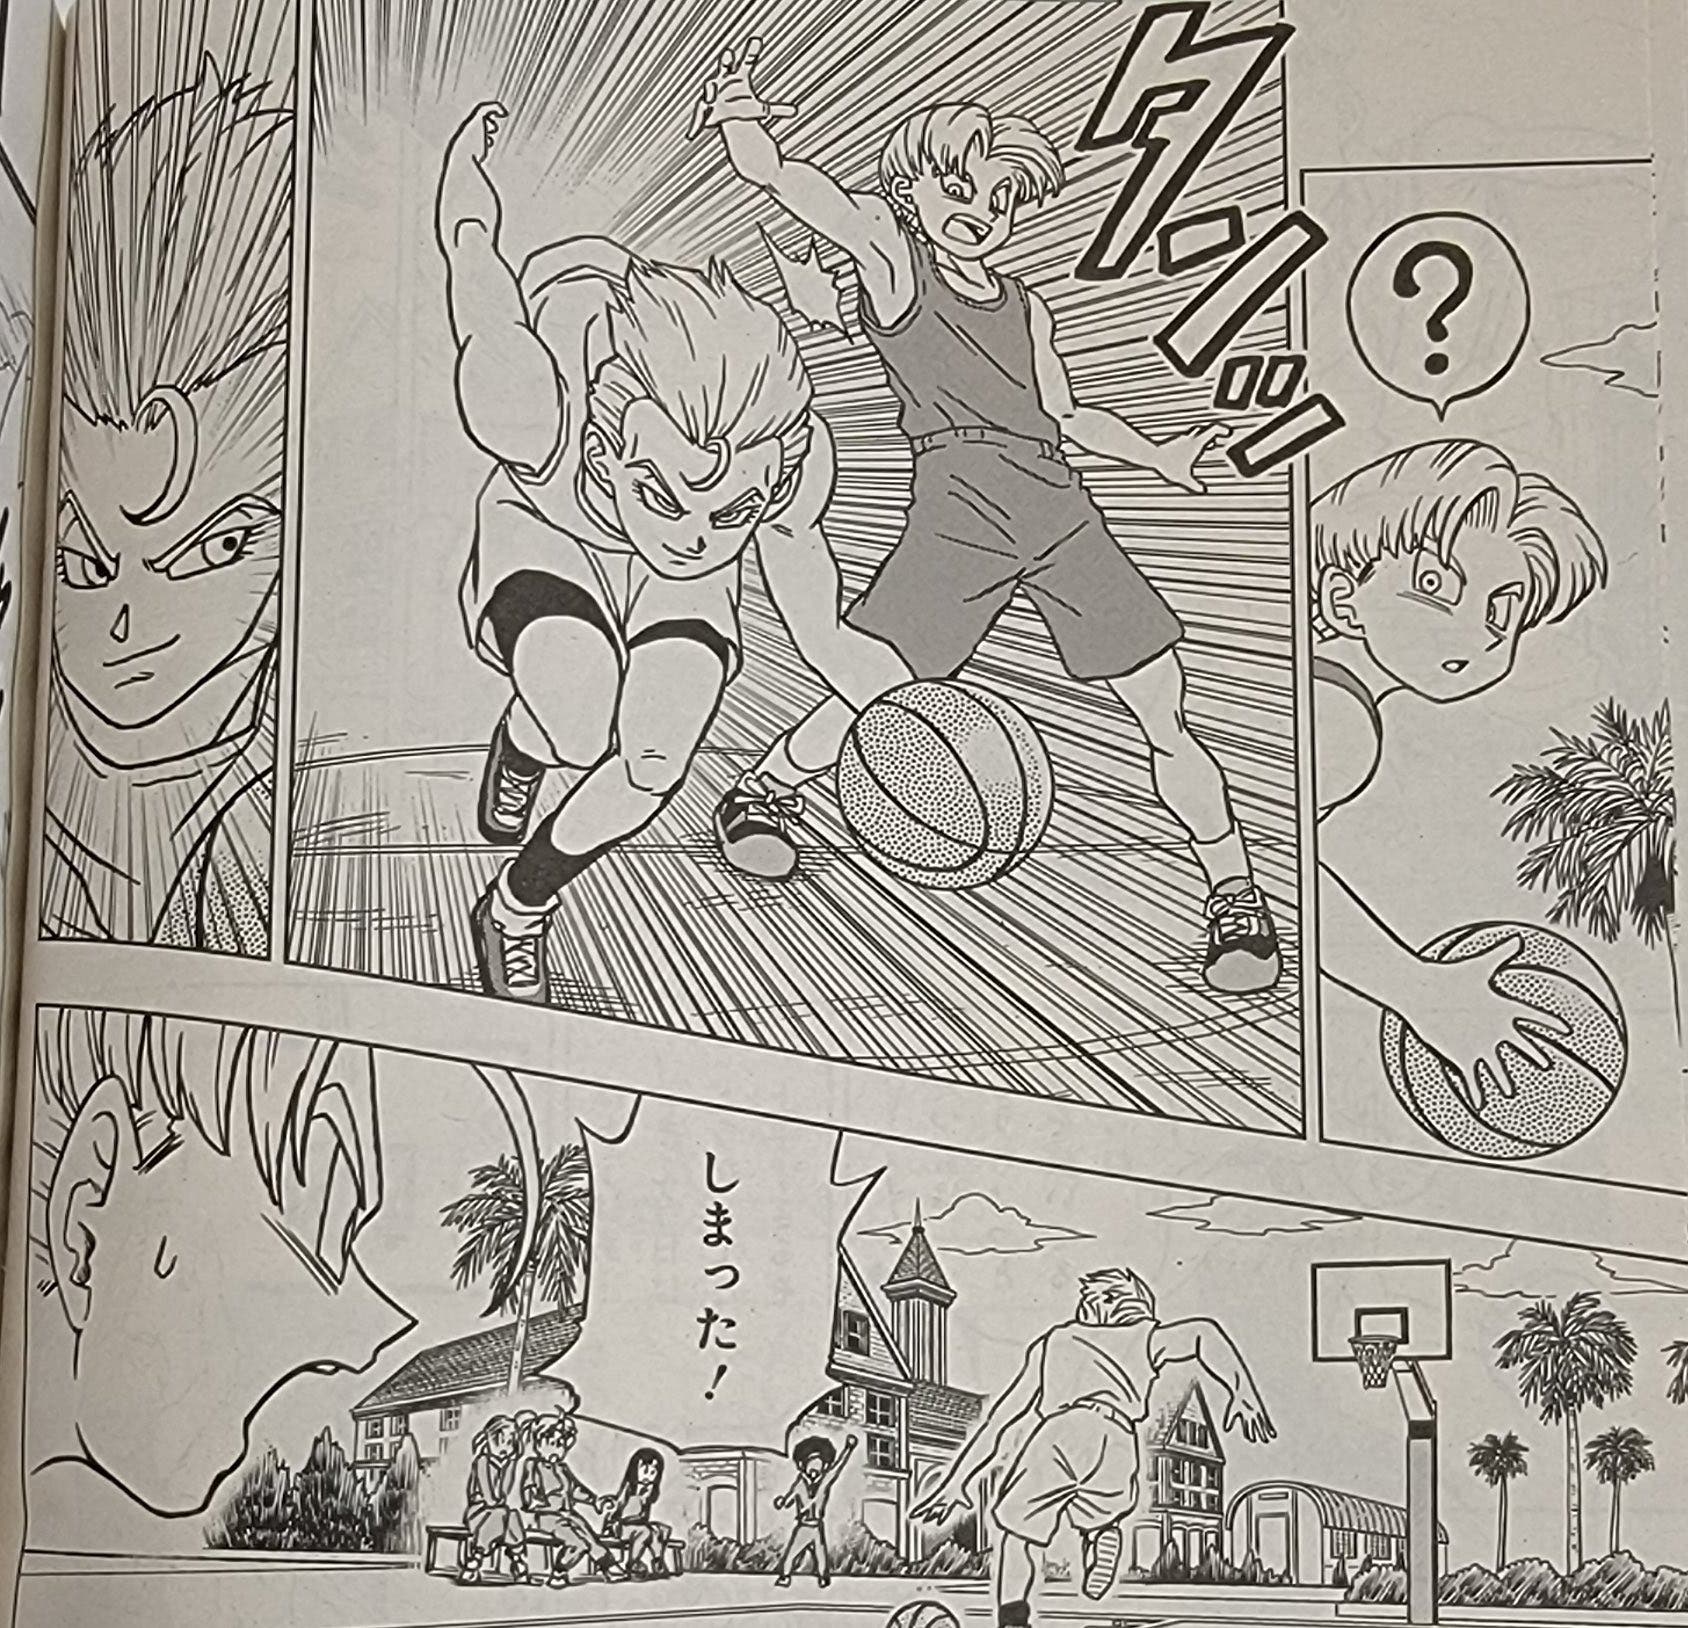 Dragon Ball Super (manga) – Capítulo 89 – DB UNIVERSO